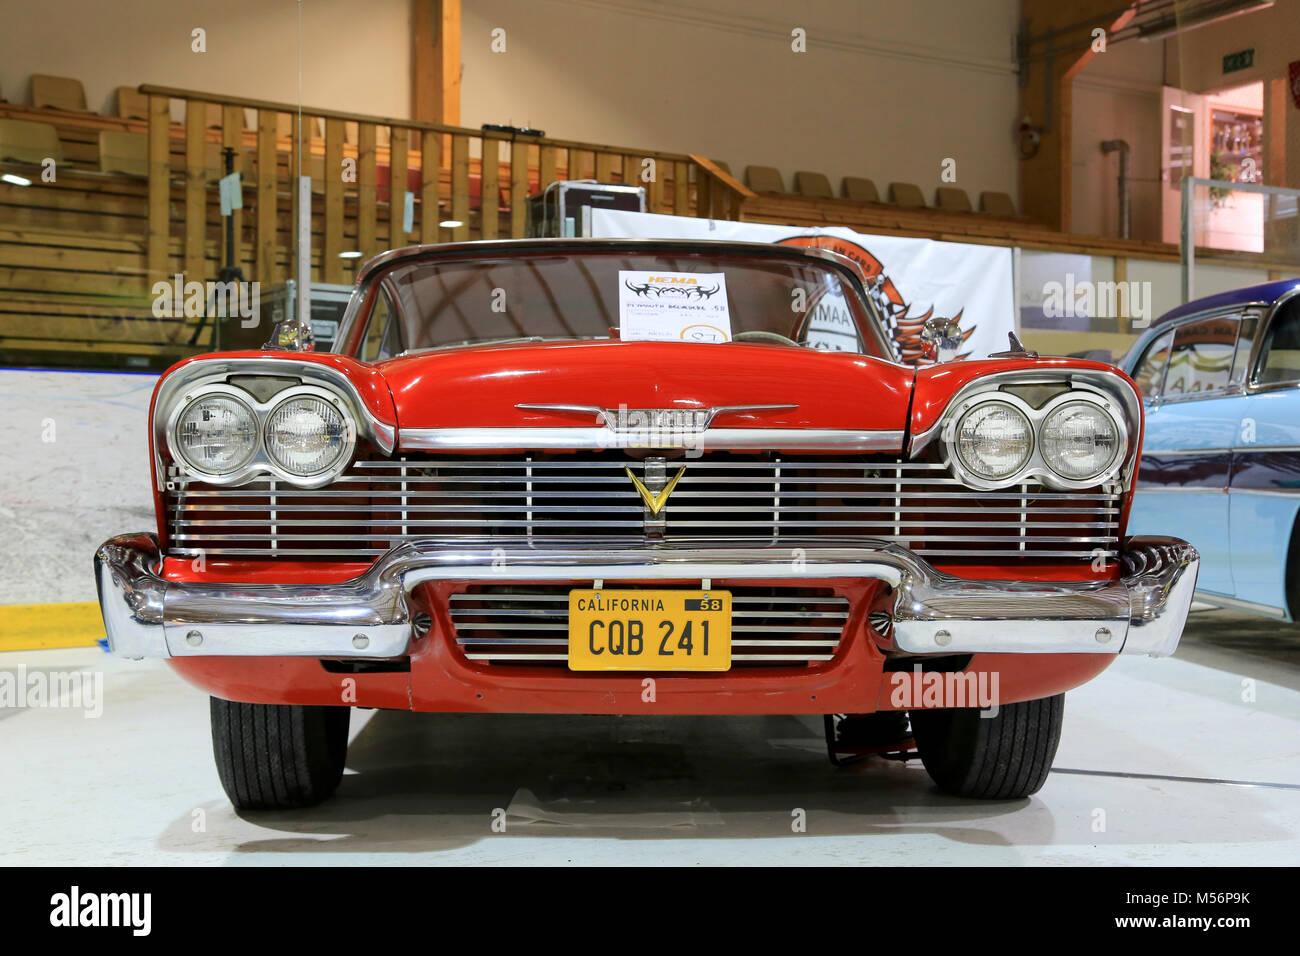 LOIMAA, Finnland - 15. JUNI 2014: Classic Red Plymouth Belvedere 1958 bei HeMa Show 2013 in Loimaa, Finnland angezeigt. Stockfoto